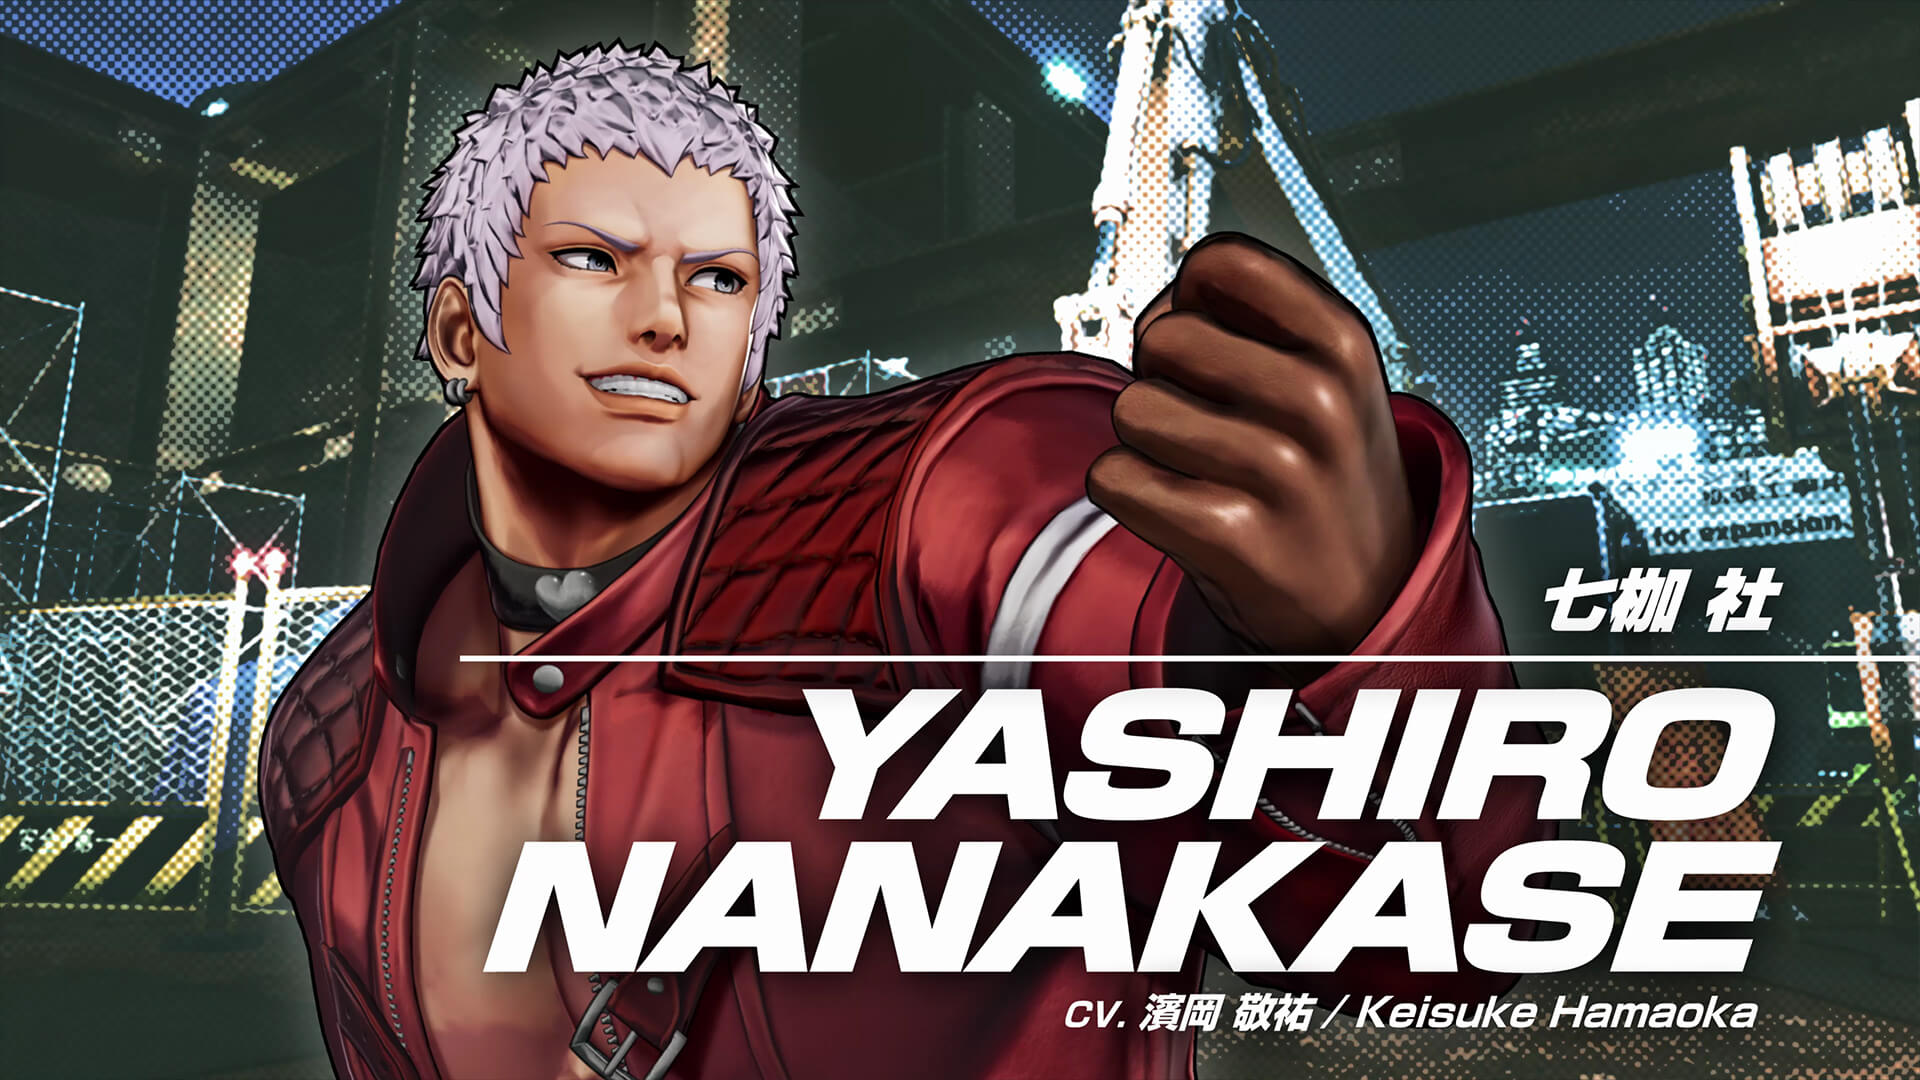 Novo trailer de The King of Fighters XV com Yashiro Nanakase 1